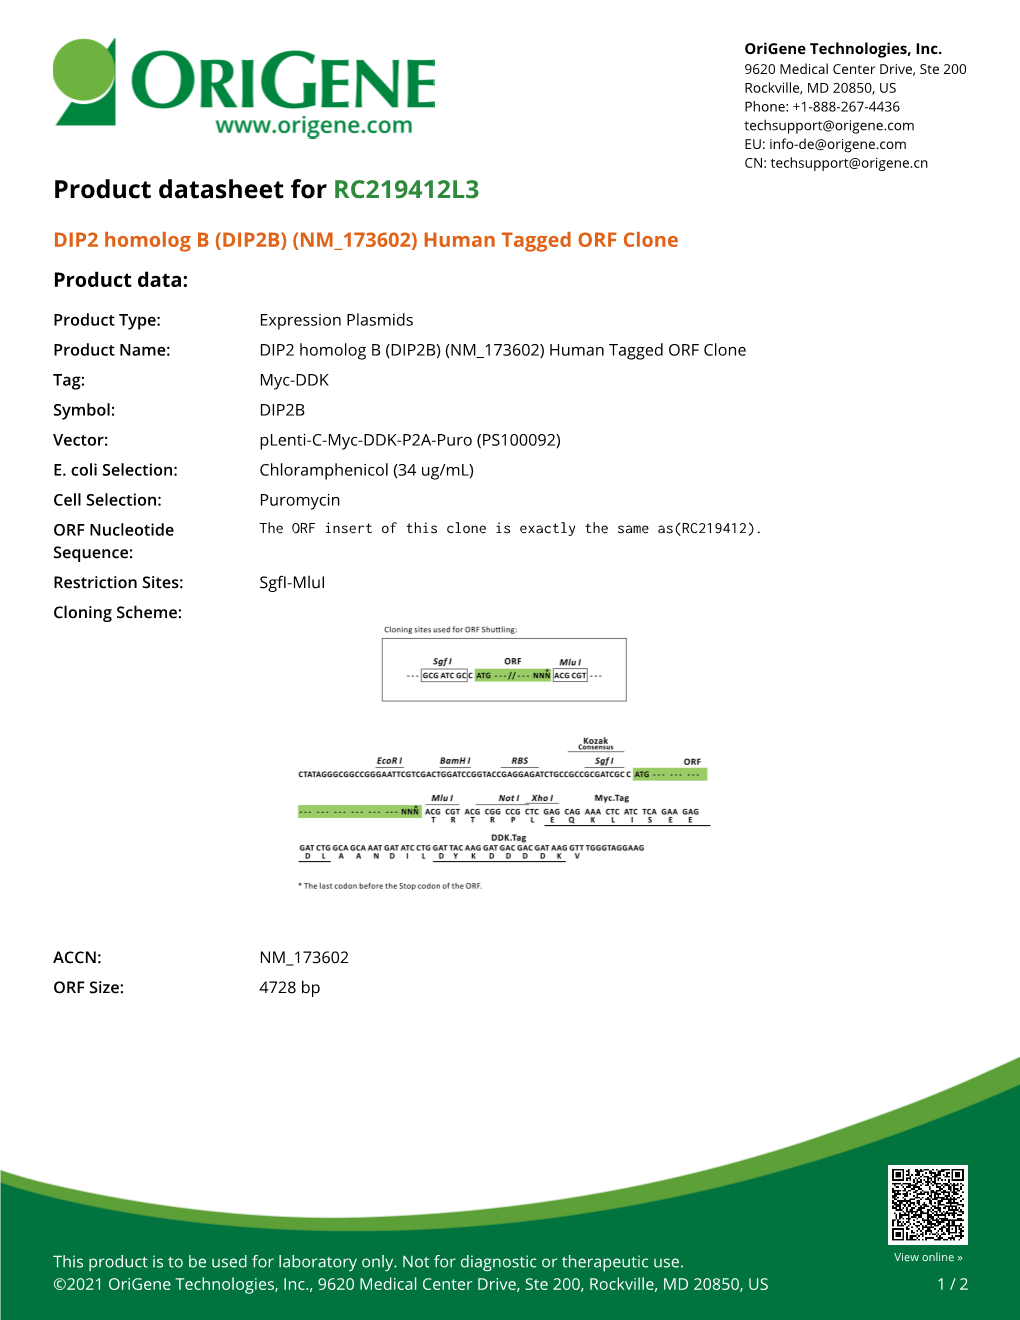 DIP2 Homolog B (DIP2B) (NM 173602) Human Tagged ORF Clone Product Data